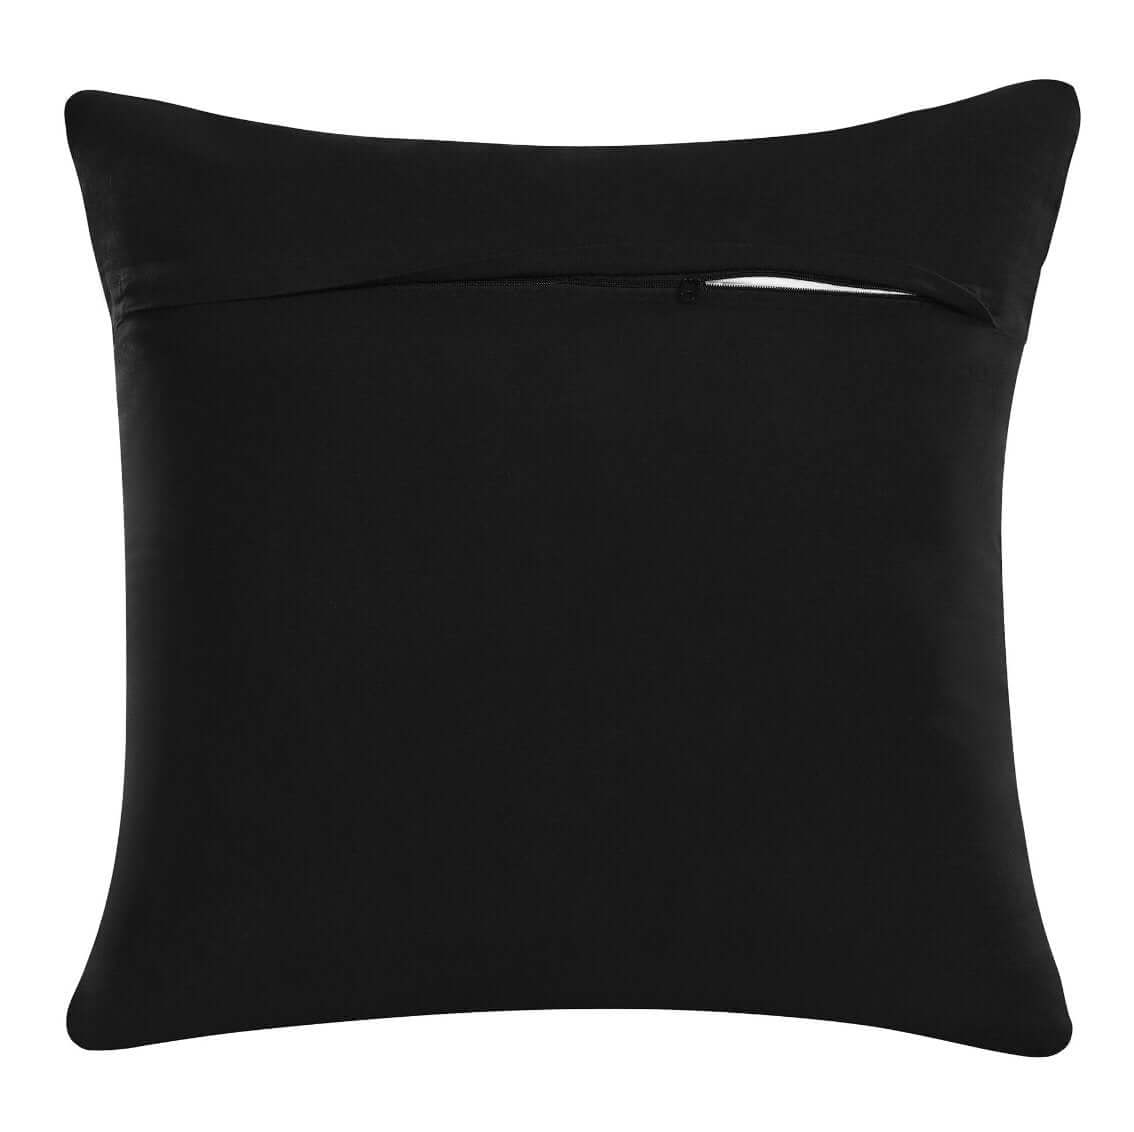 Black And White Polyester Zebra Print Zippered Throw Pillow 20"x20"